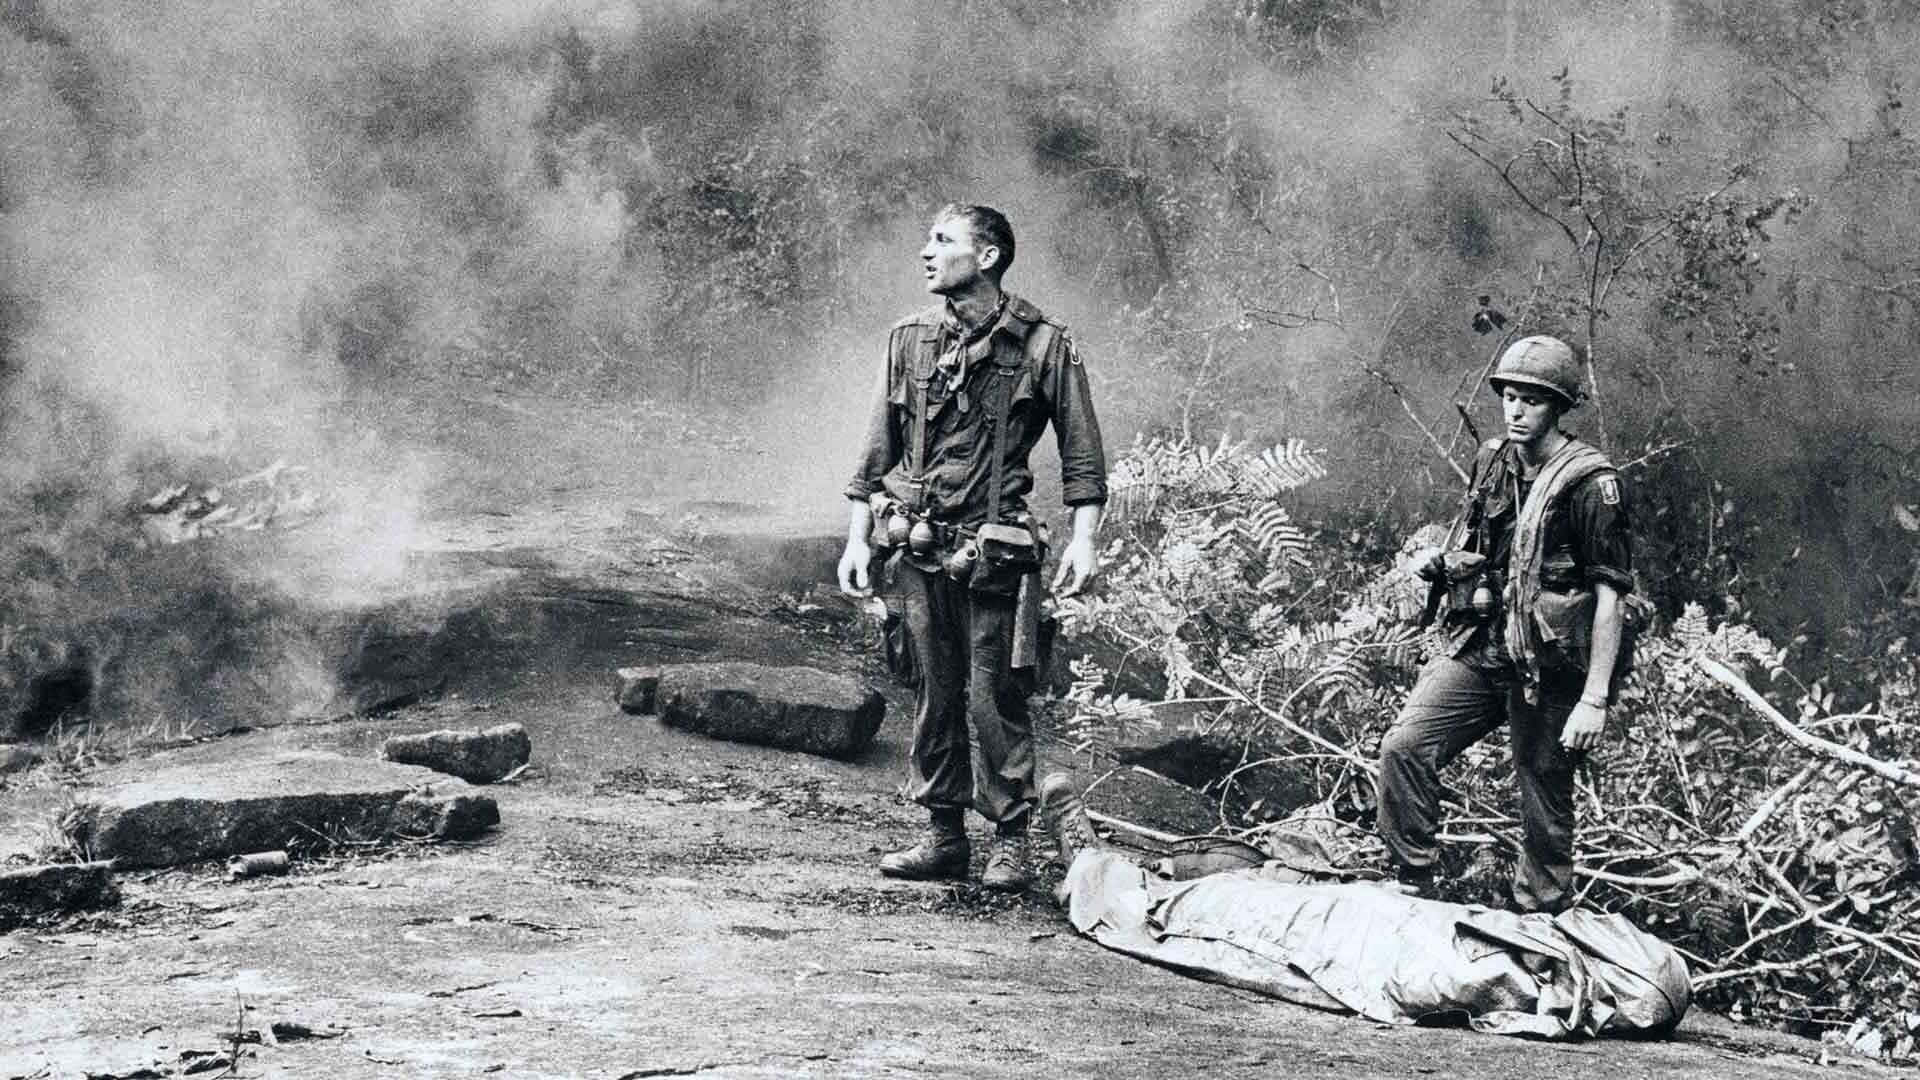 Soldiers on Patrol During the Vietnam War